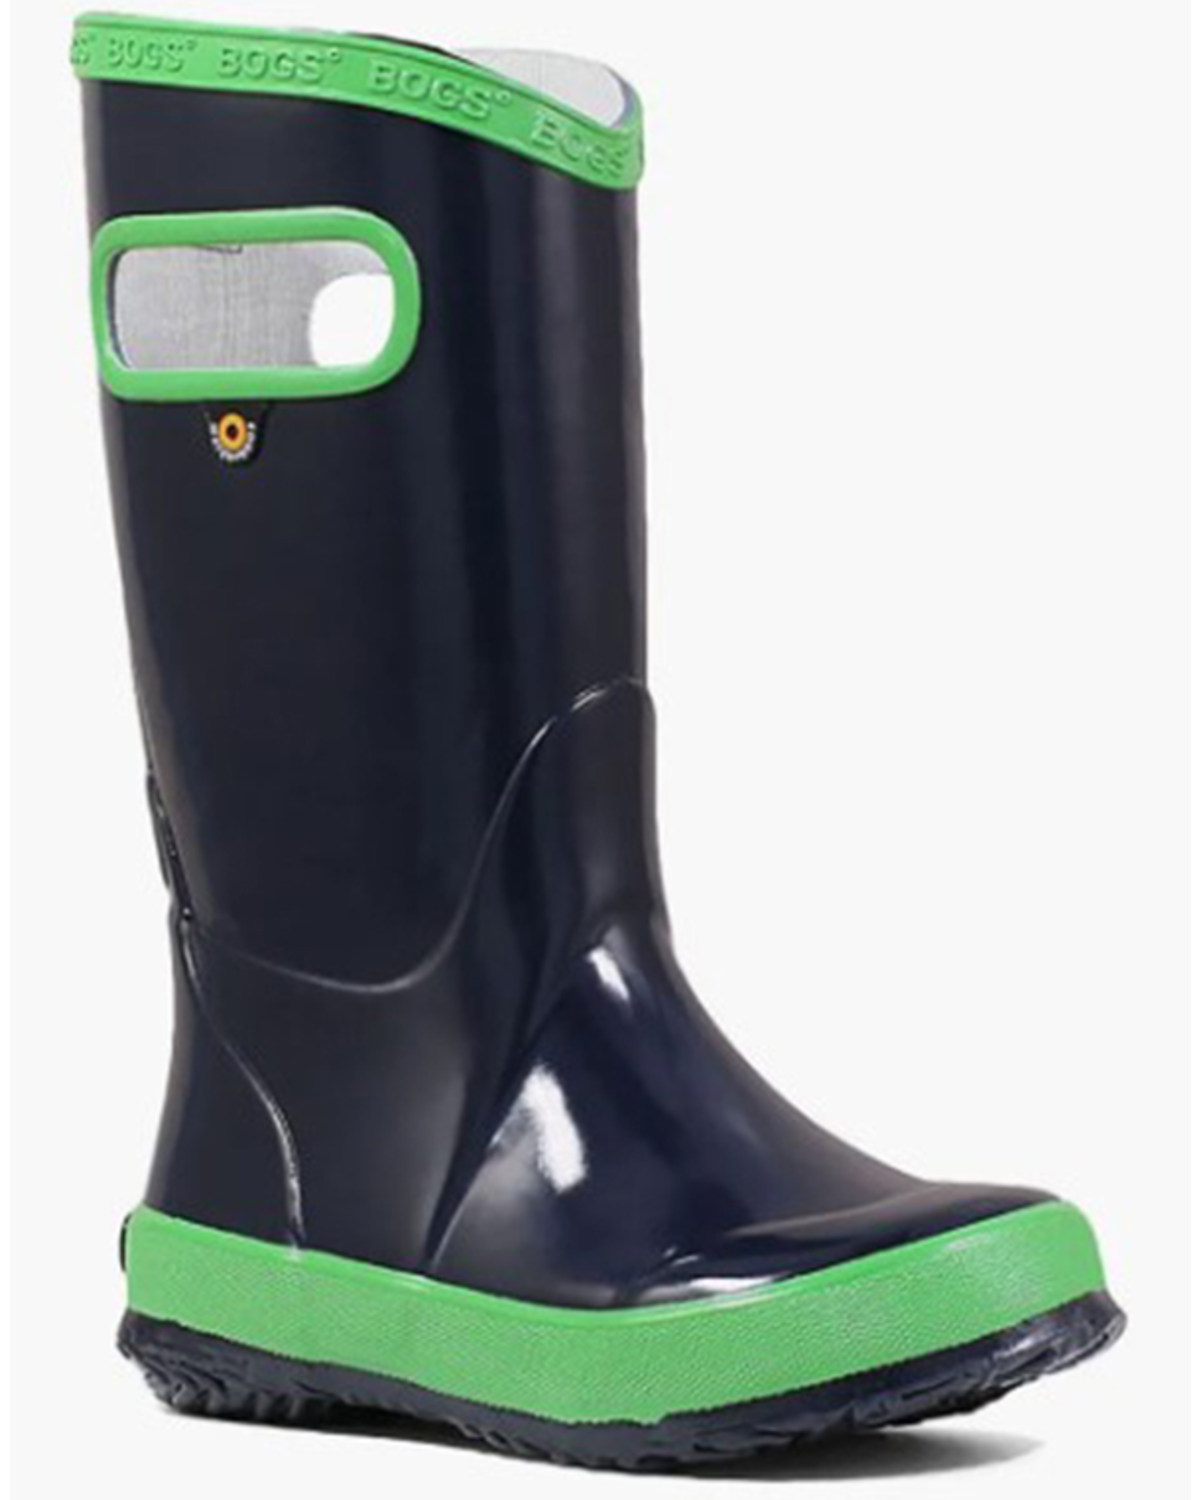 Bogs Girls' Rain Boots - Round Toe